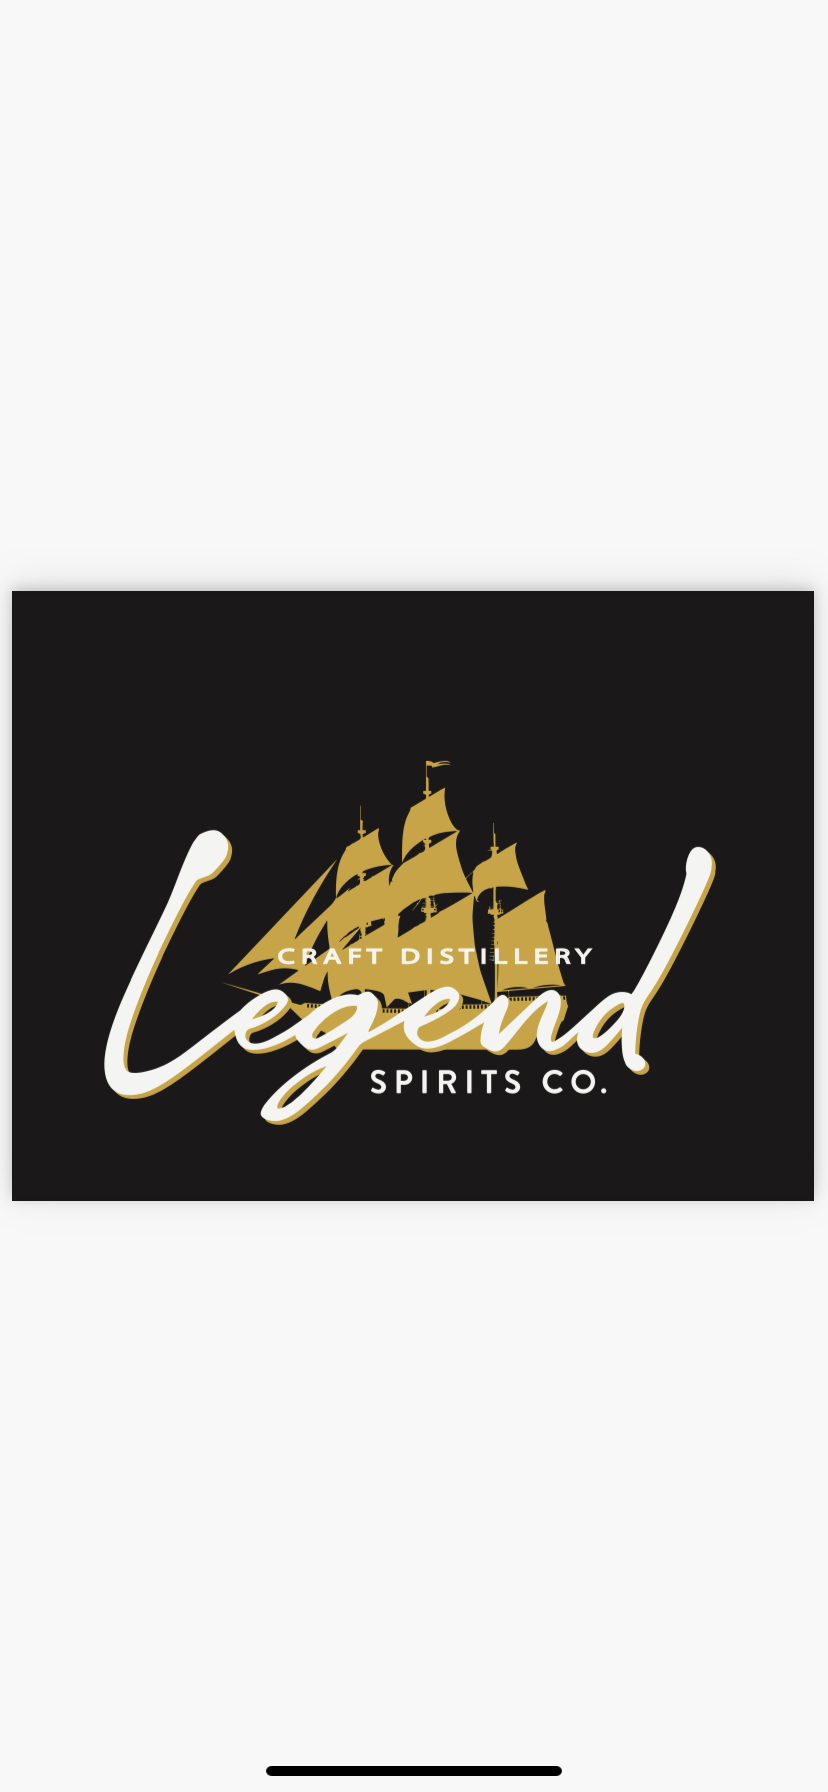 Legend Spirits Company